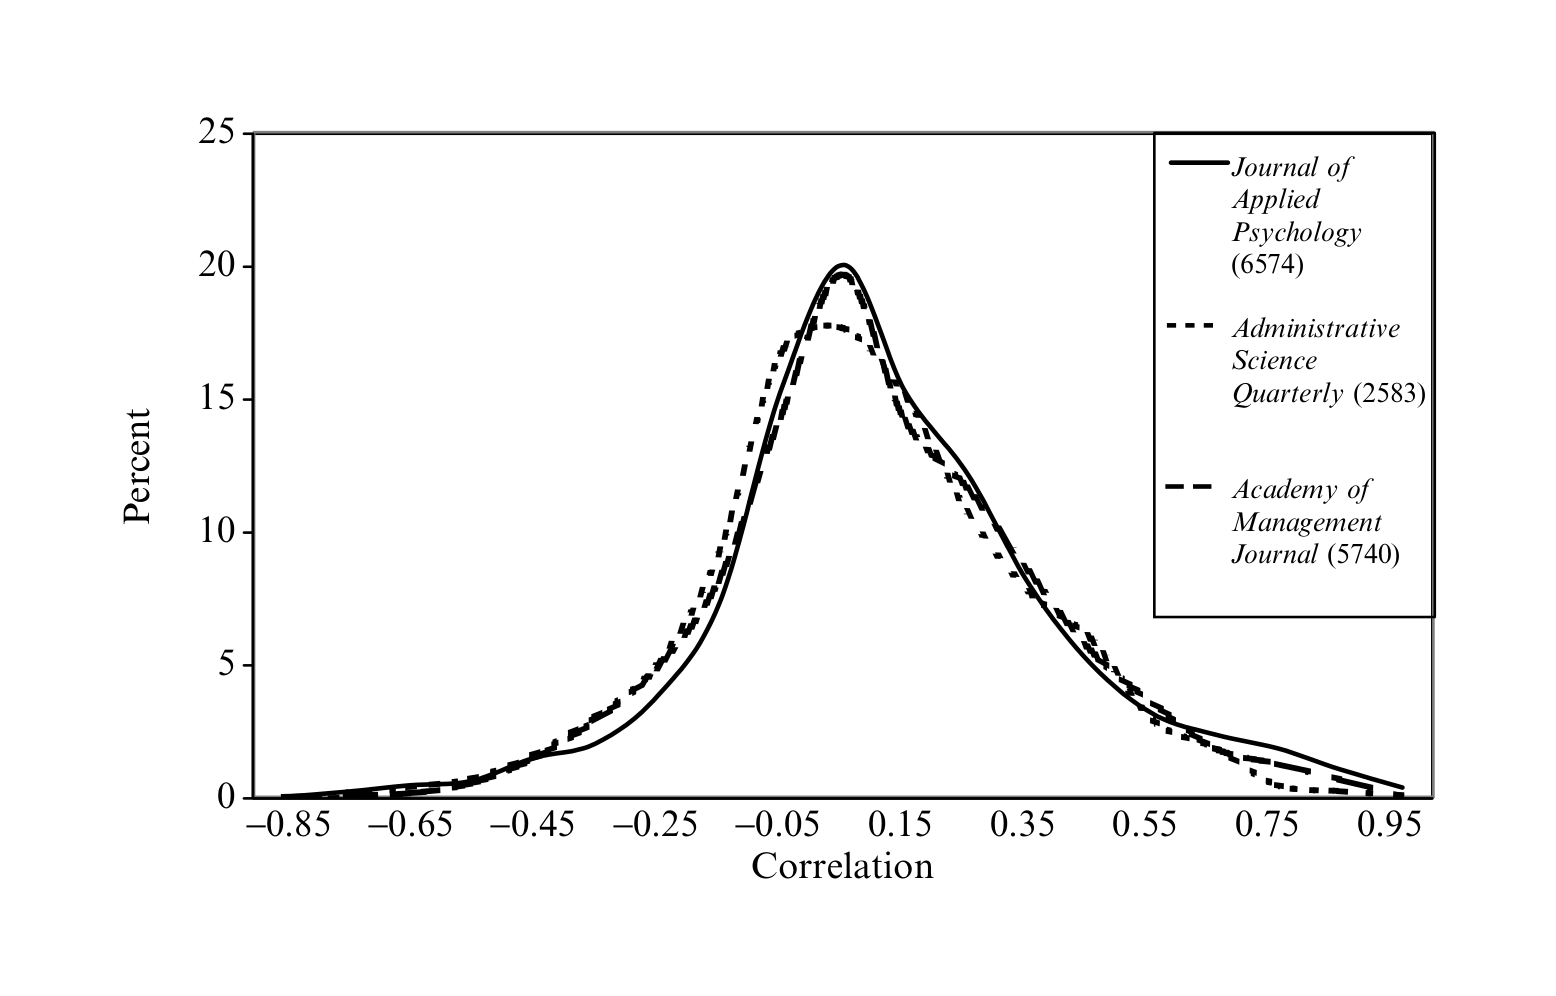 Figure 2.6 Correlations reported in three journals